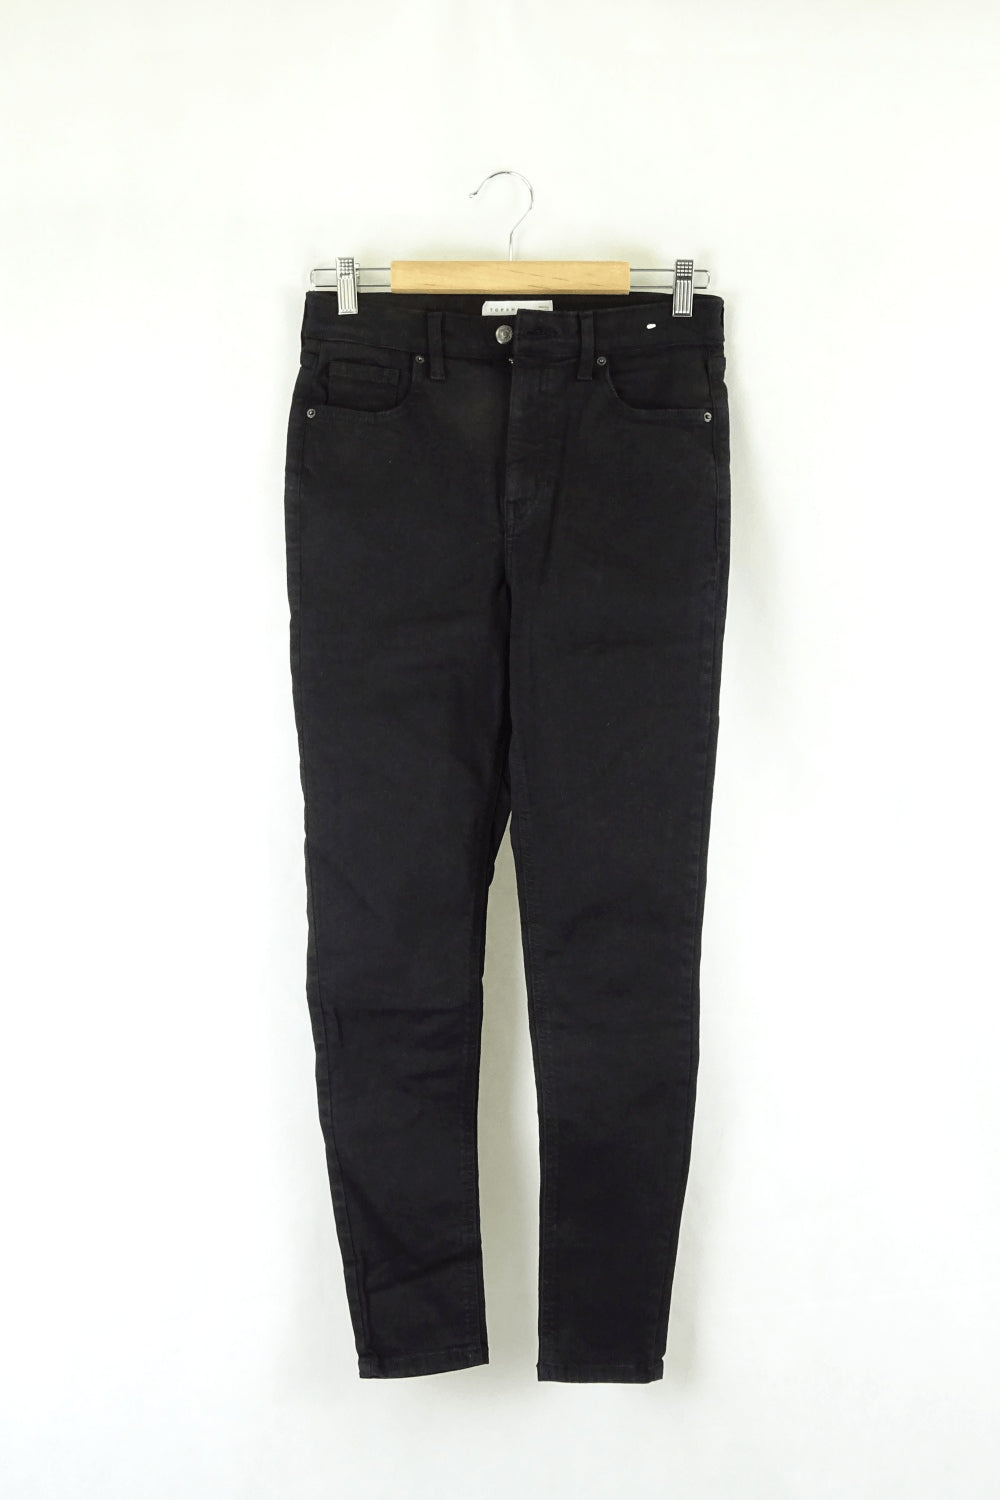 Topshop Black Jeans 10